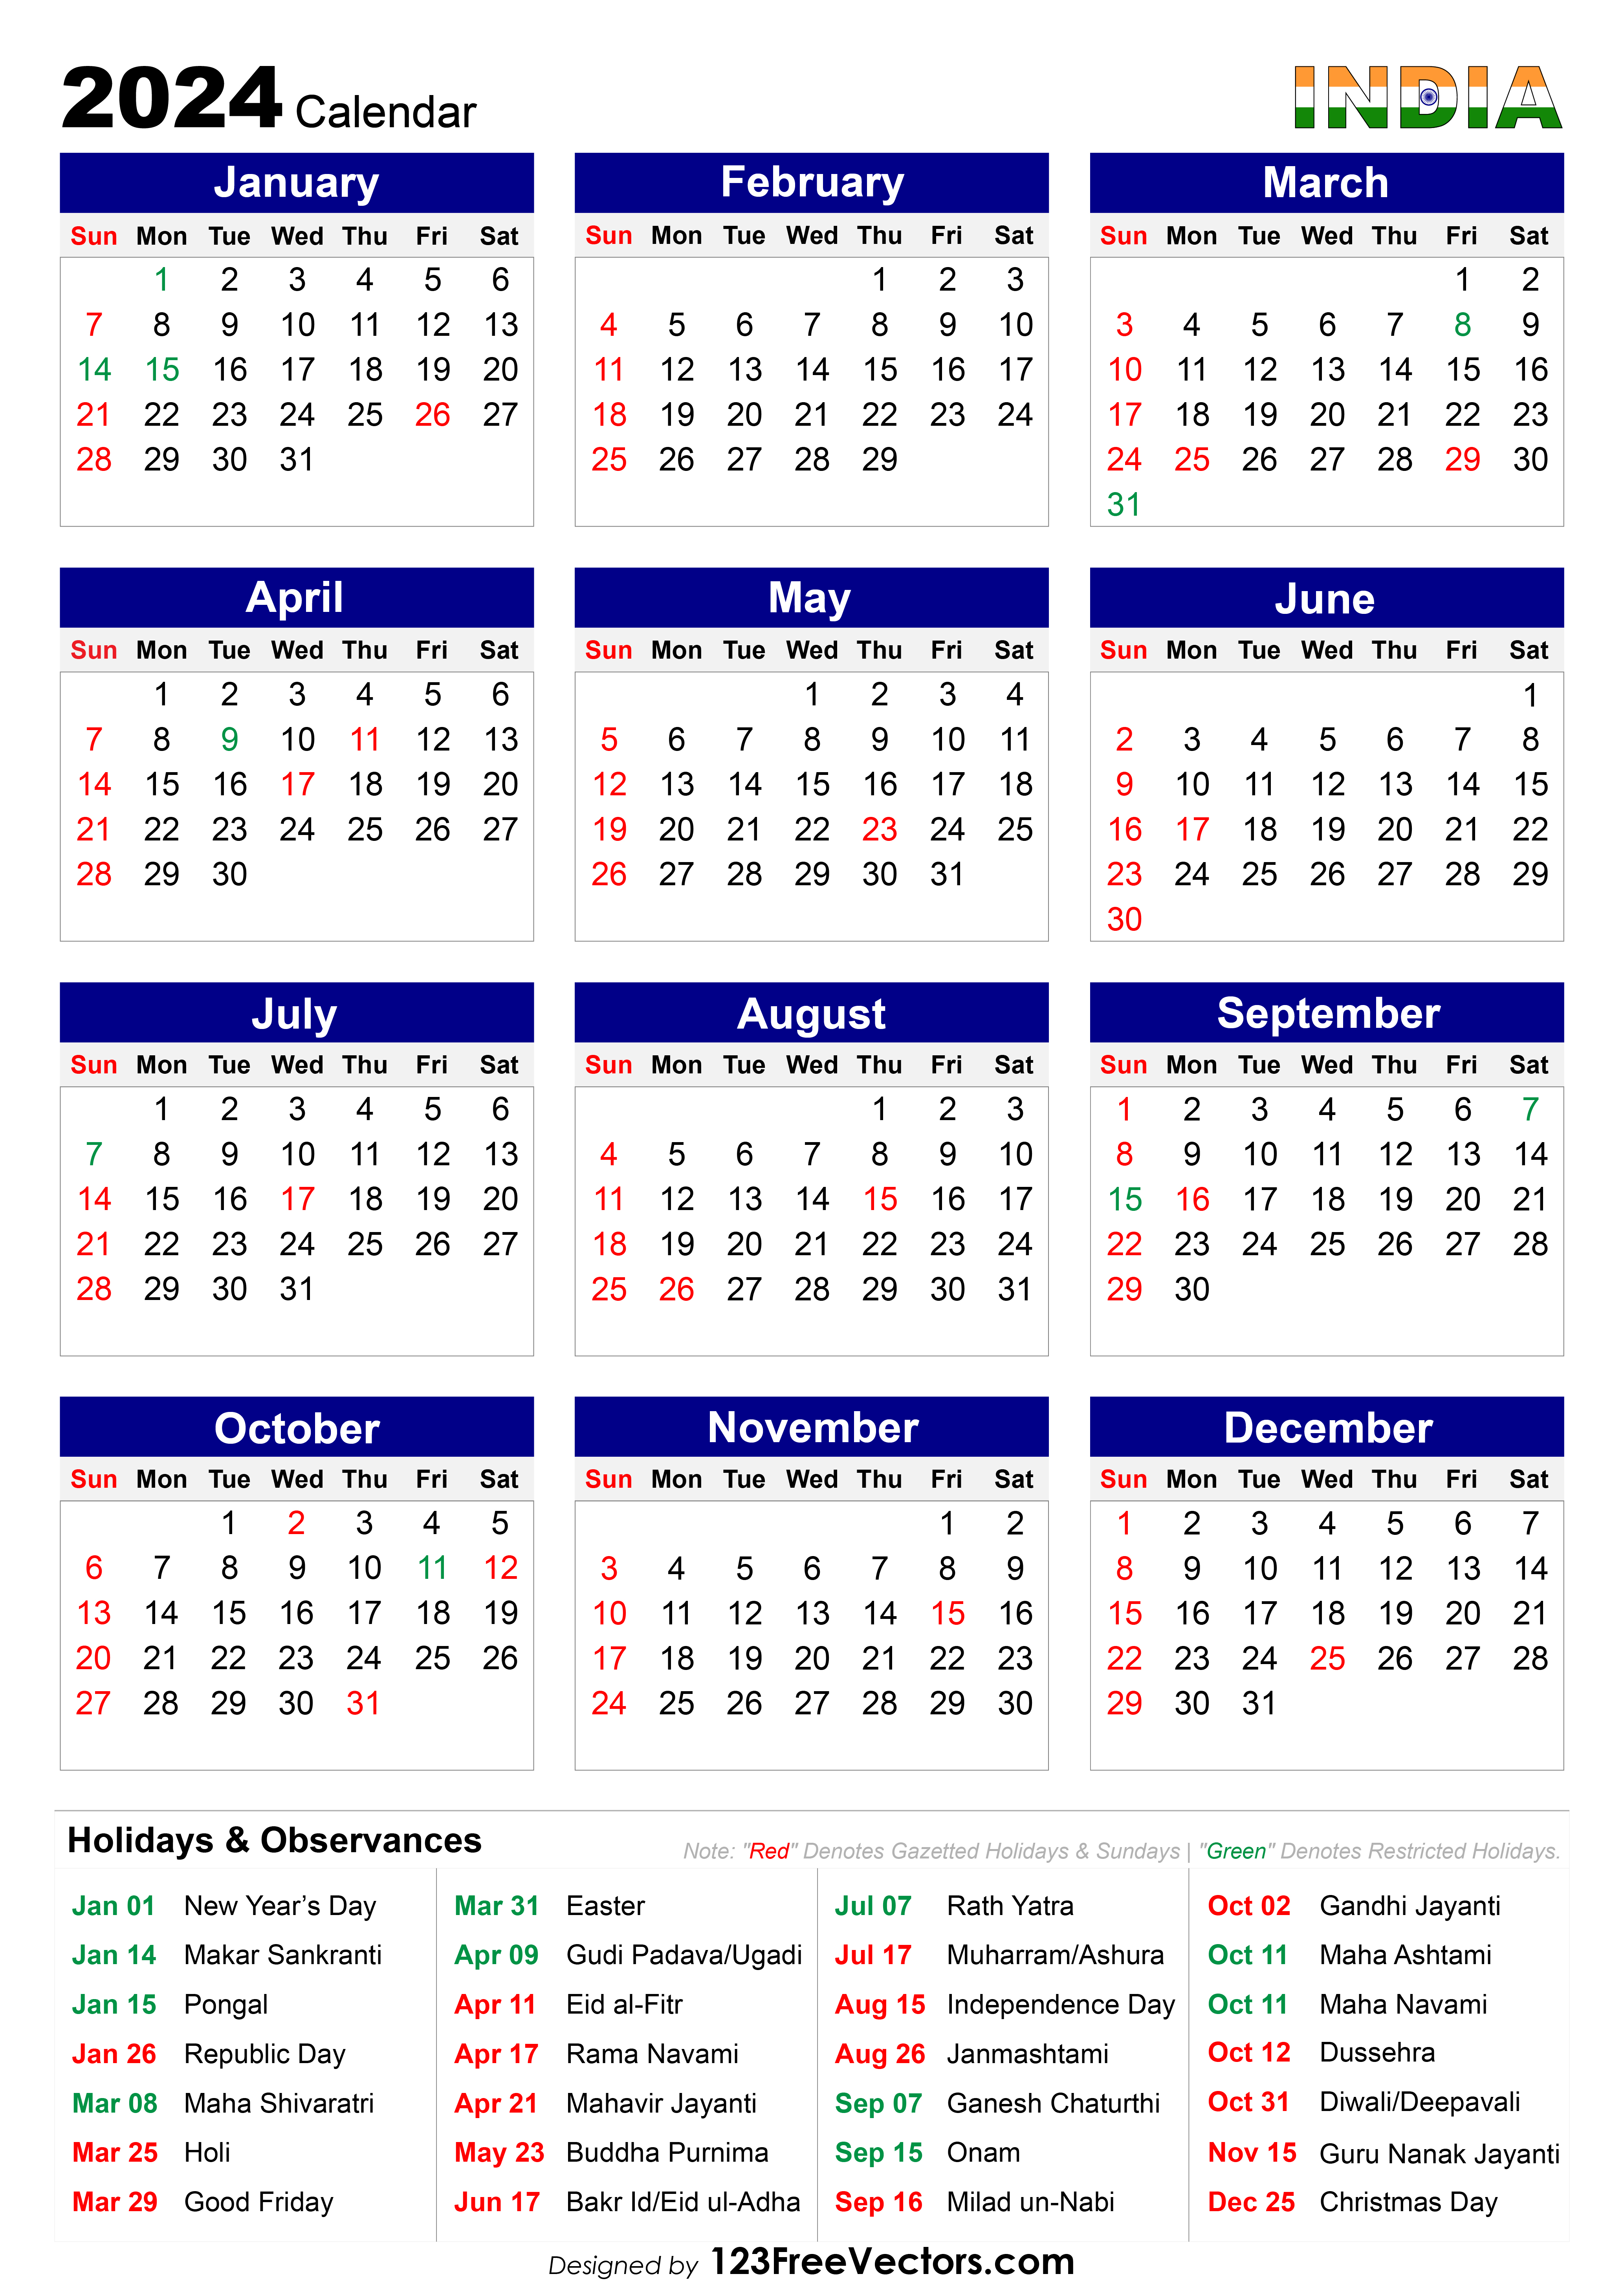 2024 Indian Festival Calendar Ketti Meridel